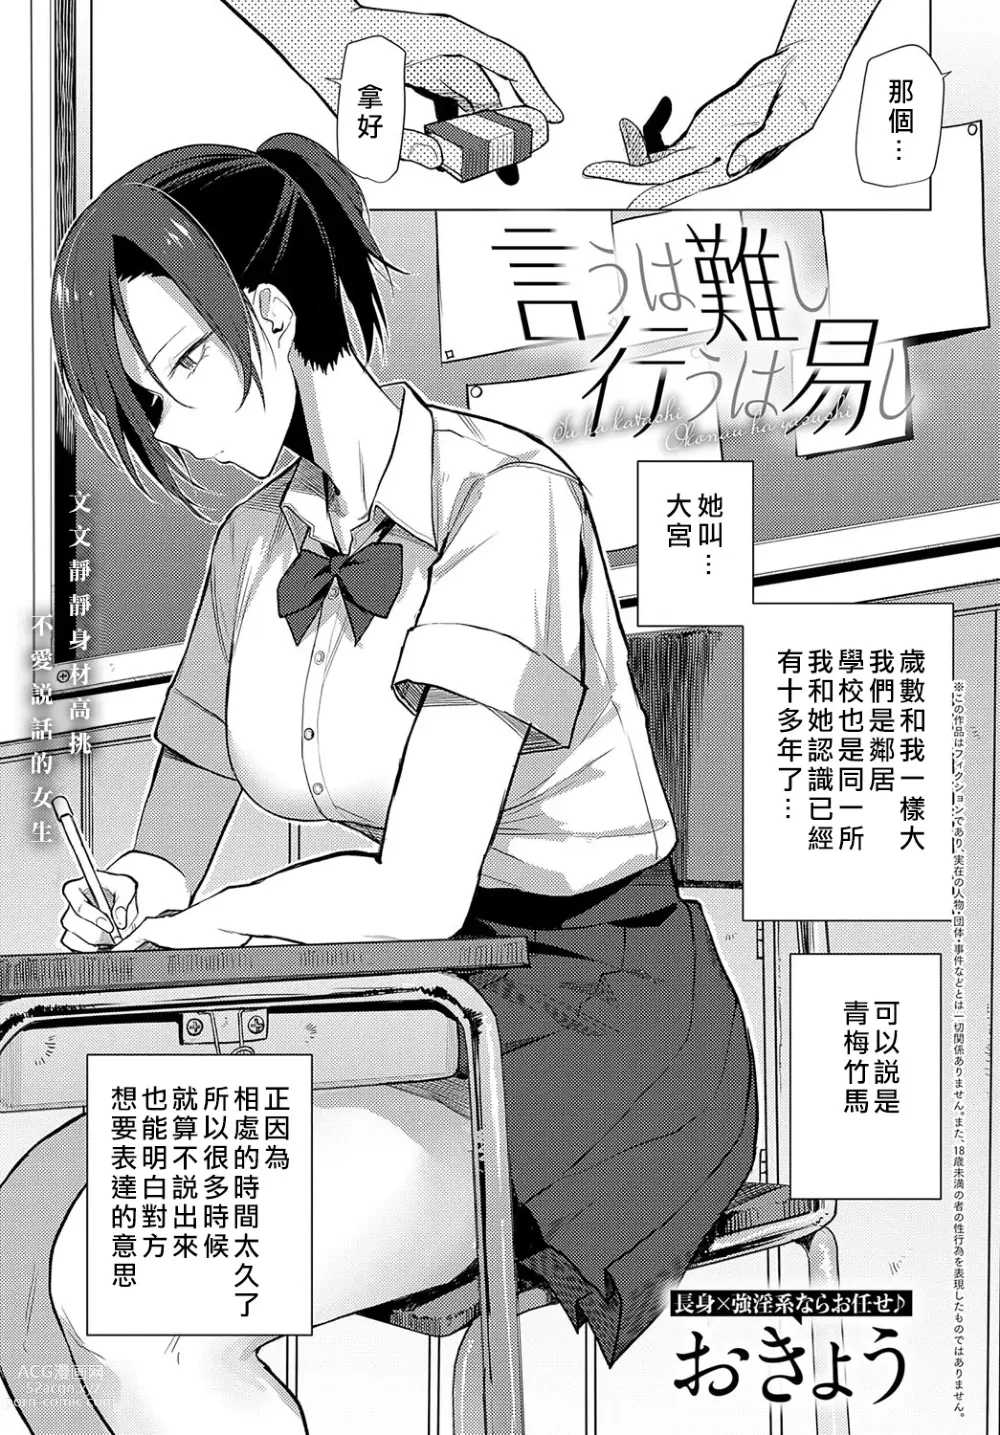 Page 1 of manga Iu wa Muzukashii Okonau wa Yasushi